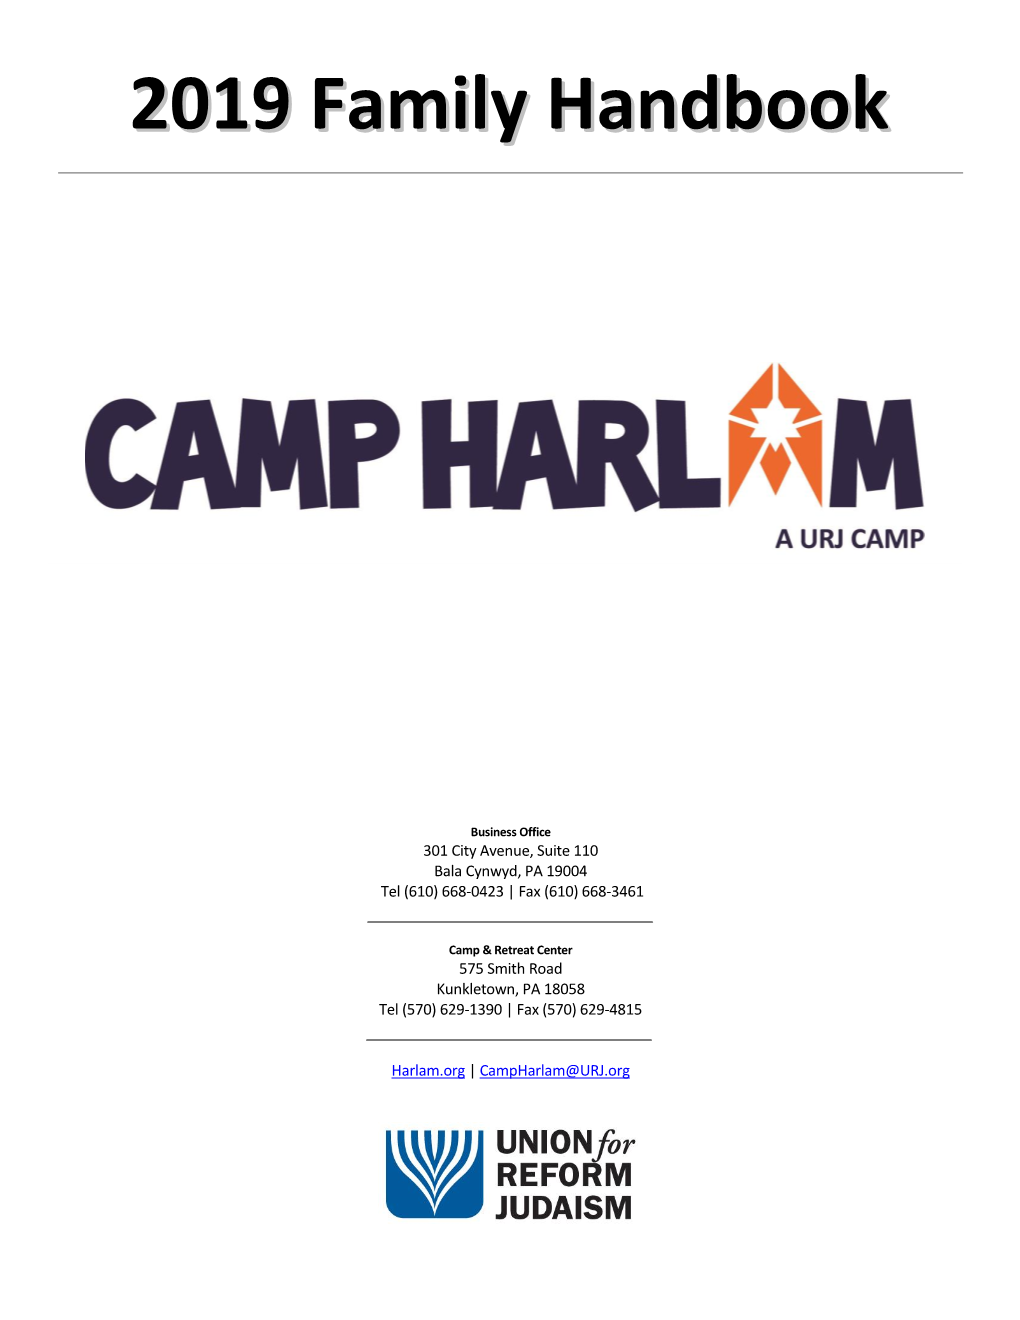 Camp Harlam Family Handbook